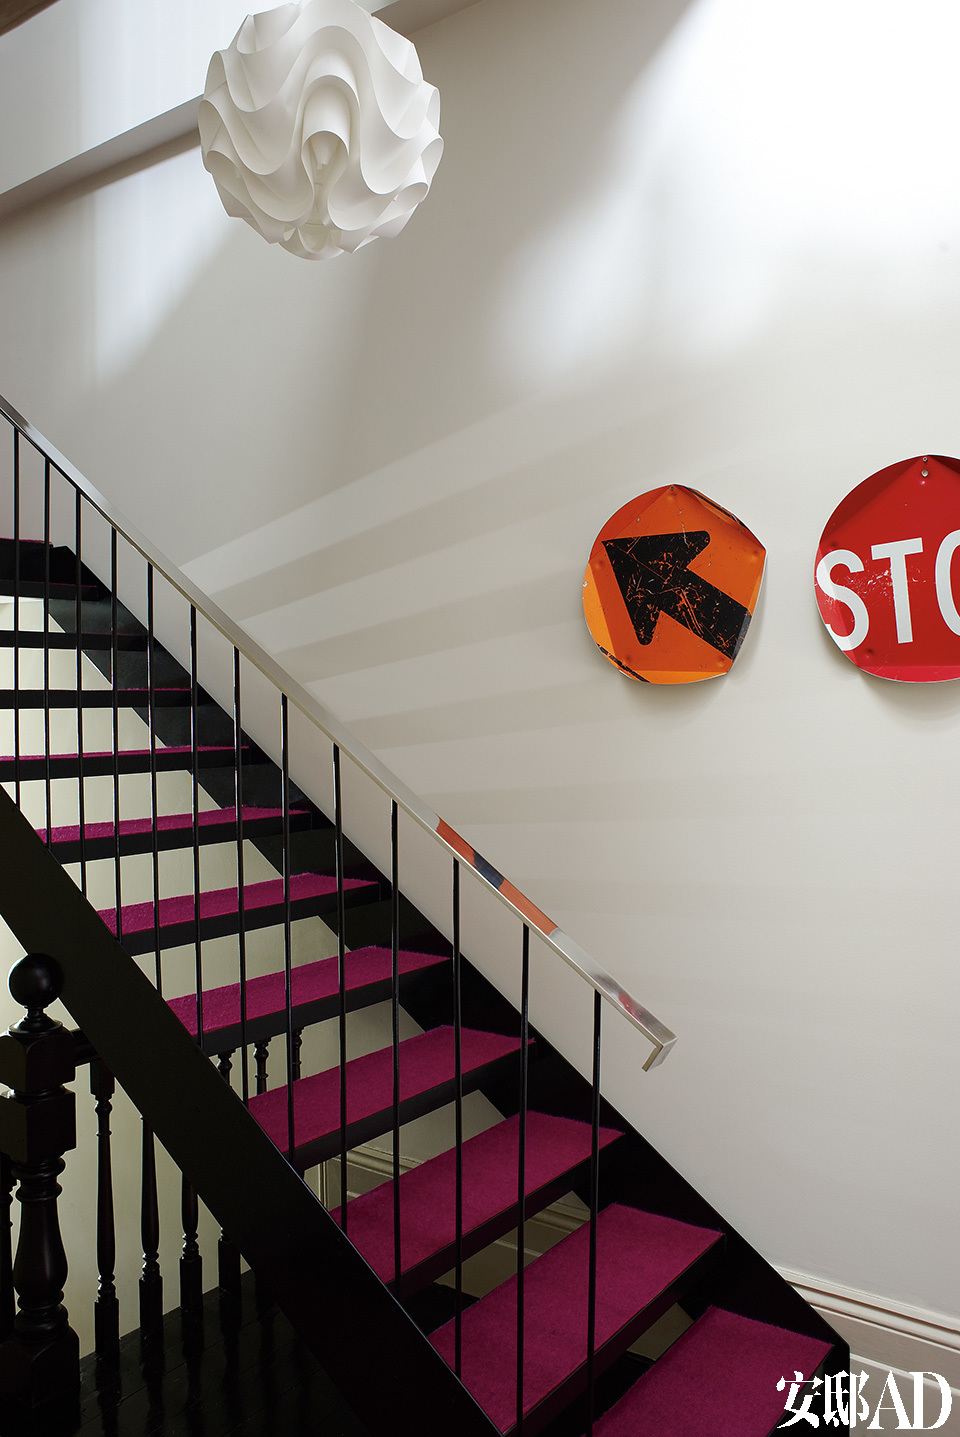 After 楼梯墙面上挂着Boris Bally 的作品“Road Sign Trays”，来自Planet Furniture。